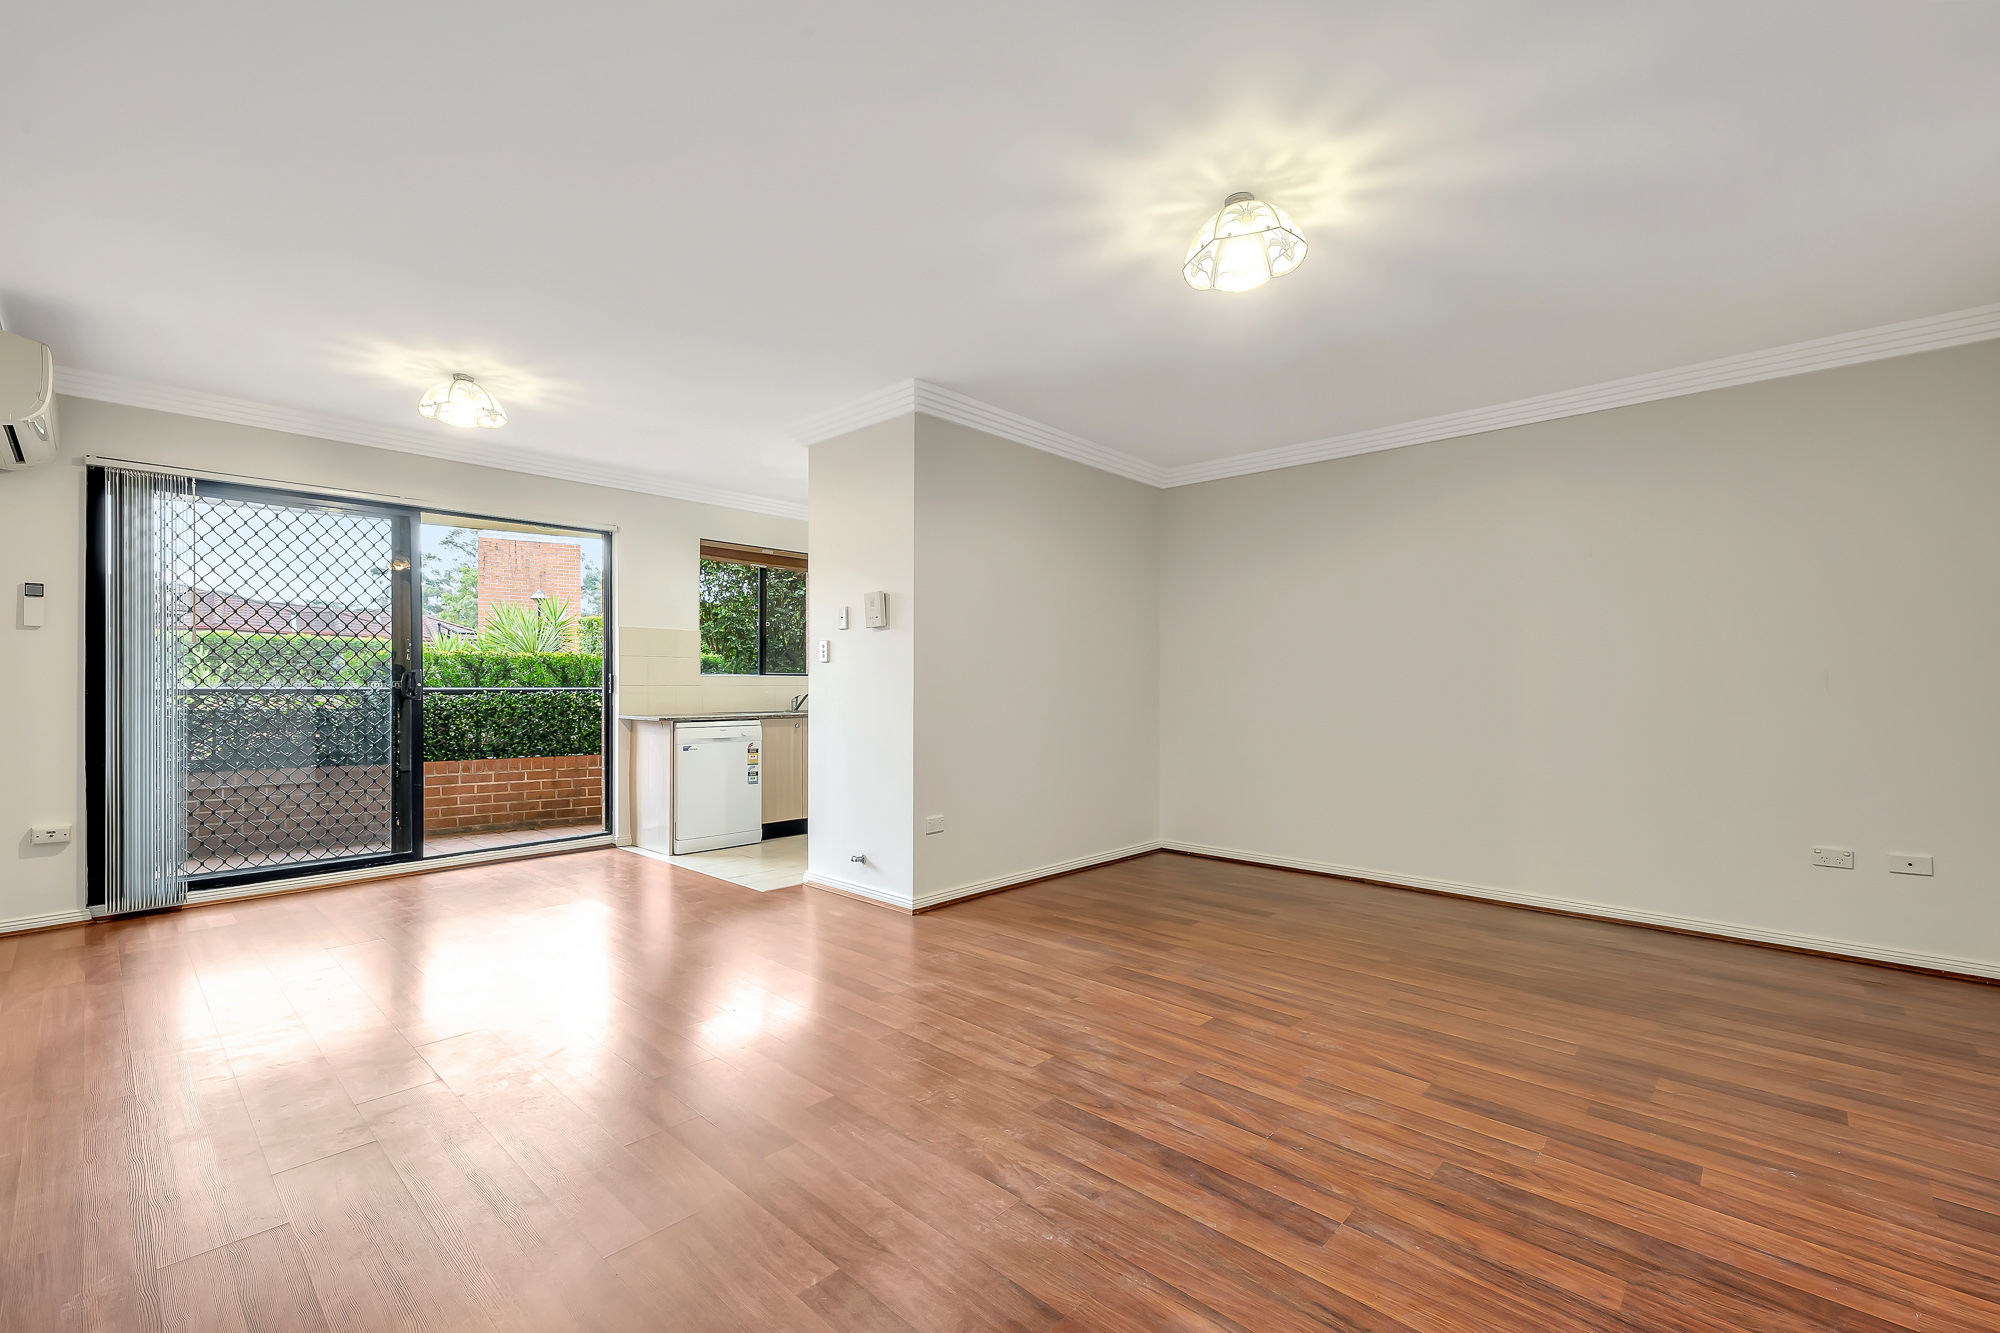 3 Bedrooms, Apartment, Leased, Dobson Crescent, 2 Bathrooms, Listing ID 1627, Baulkham Hills, NSW, Australia, 2145,